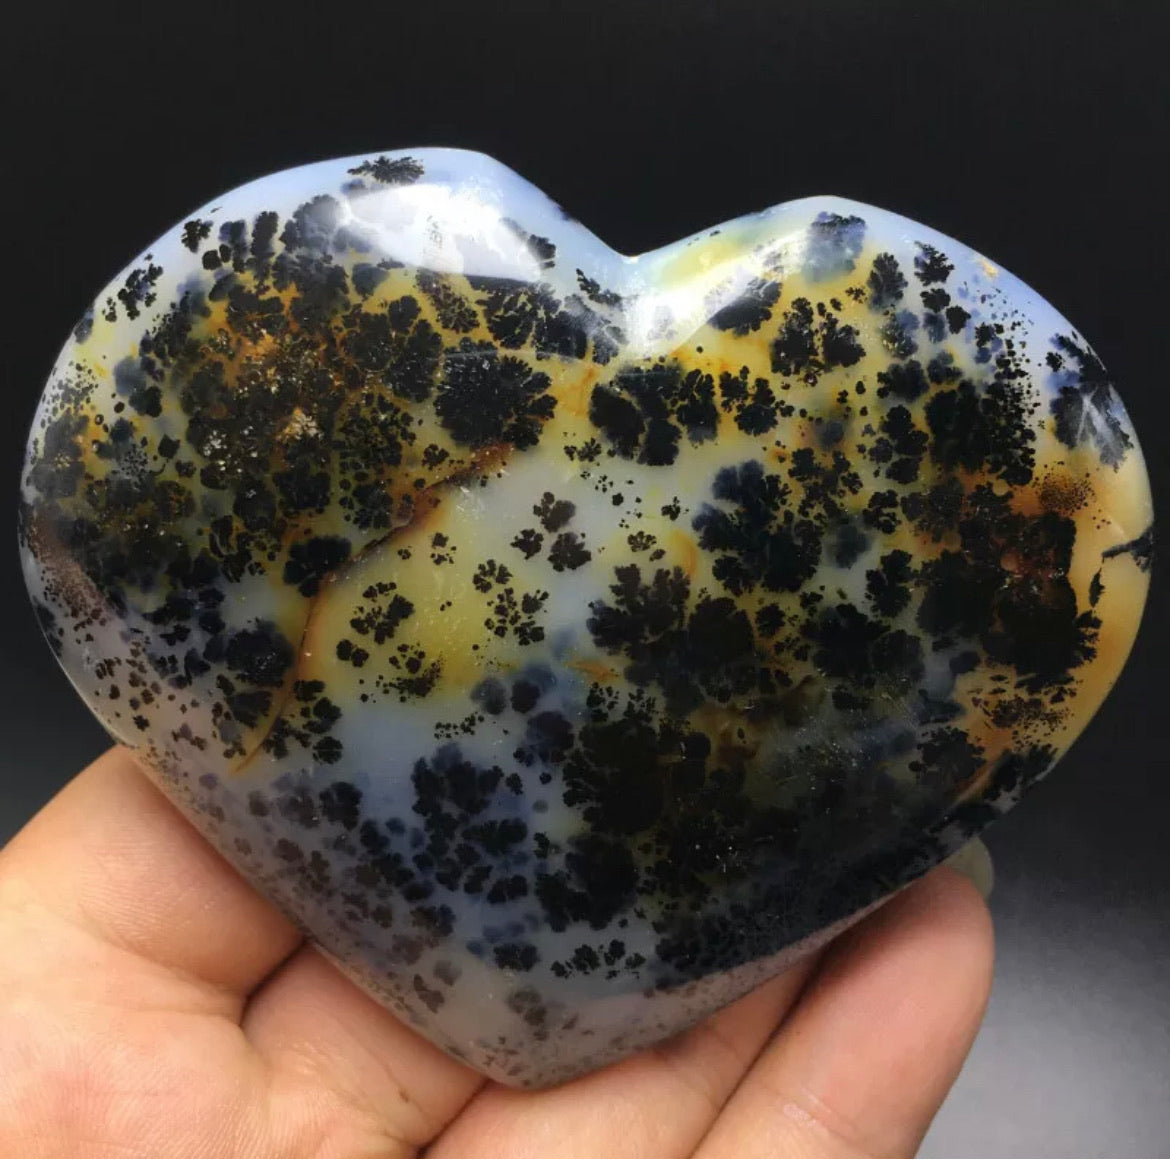 Natural Rare Aquatic Agate Large Heart